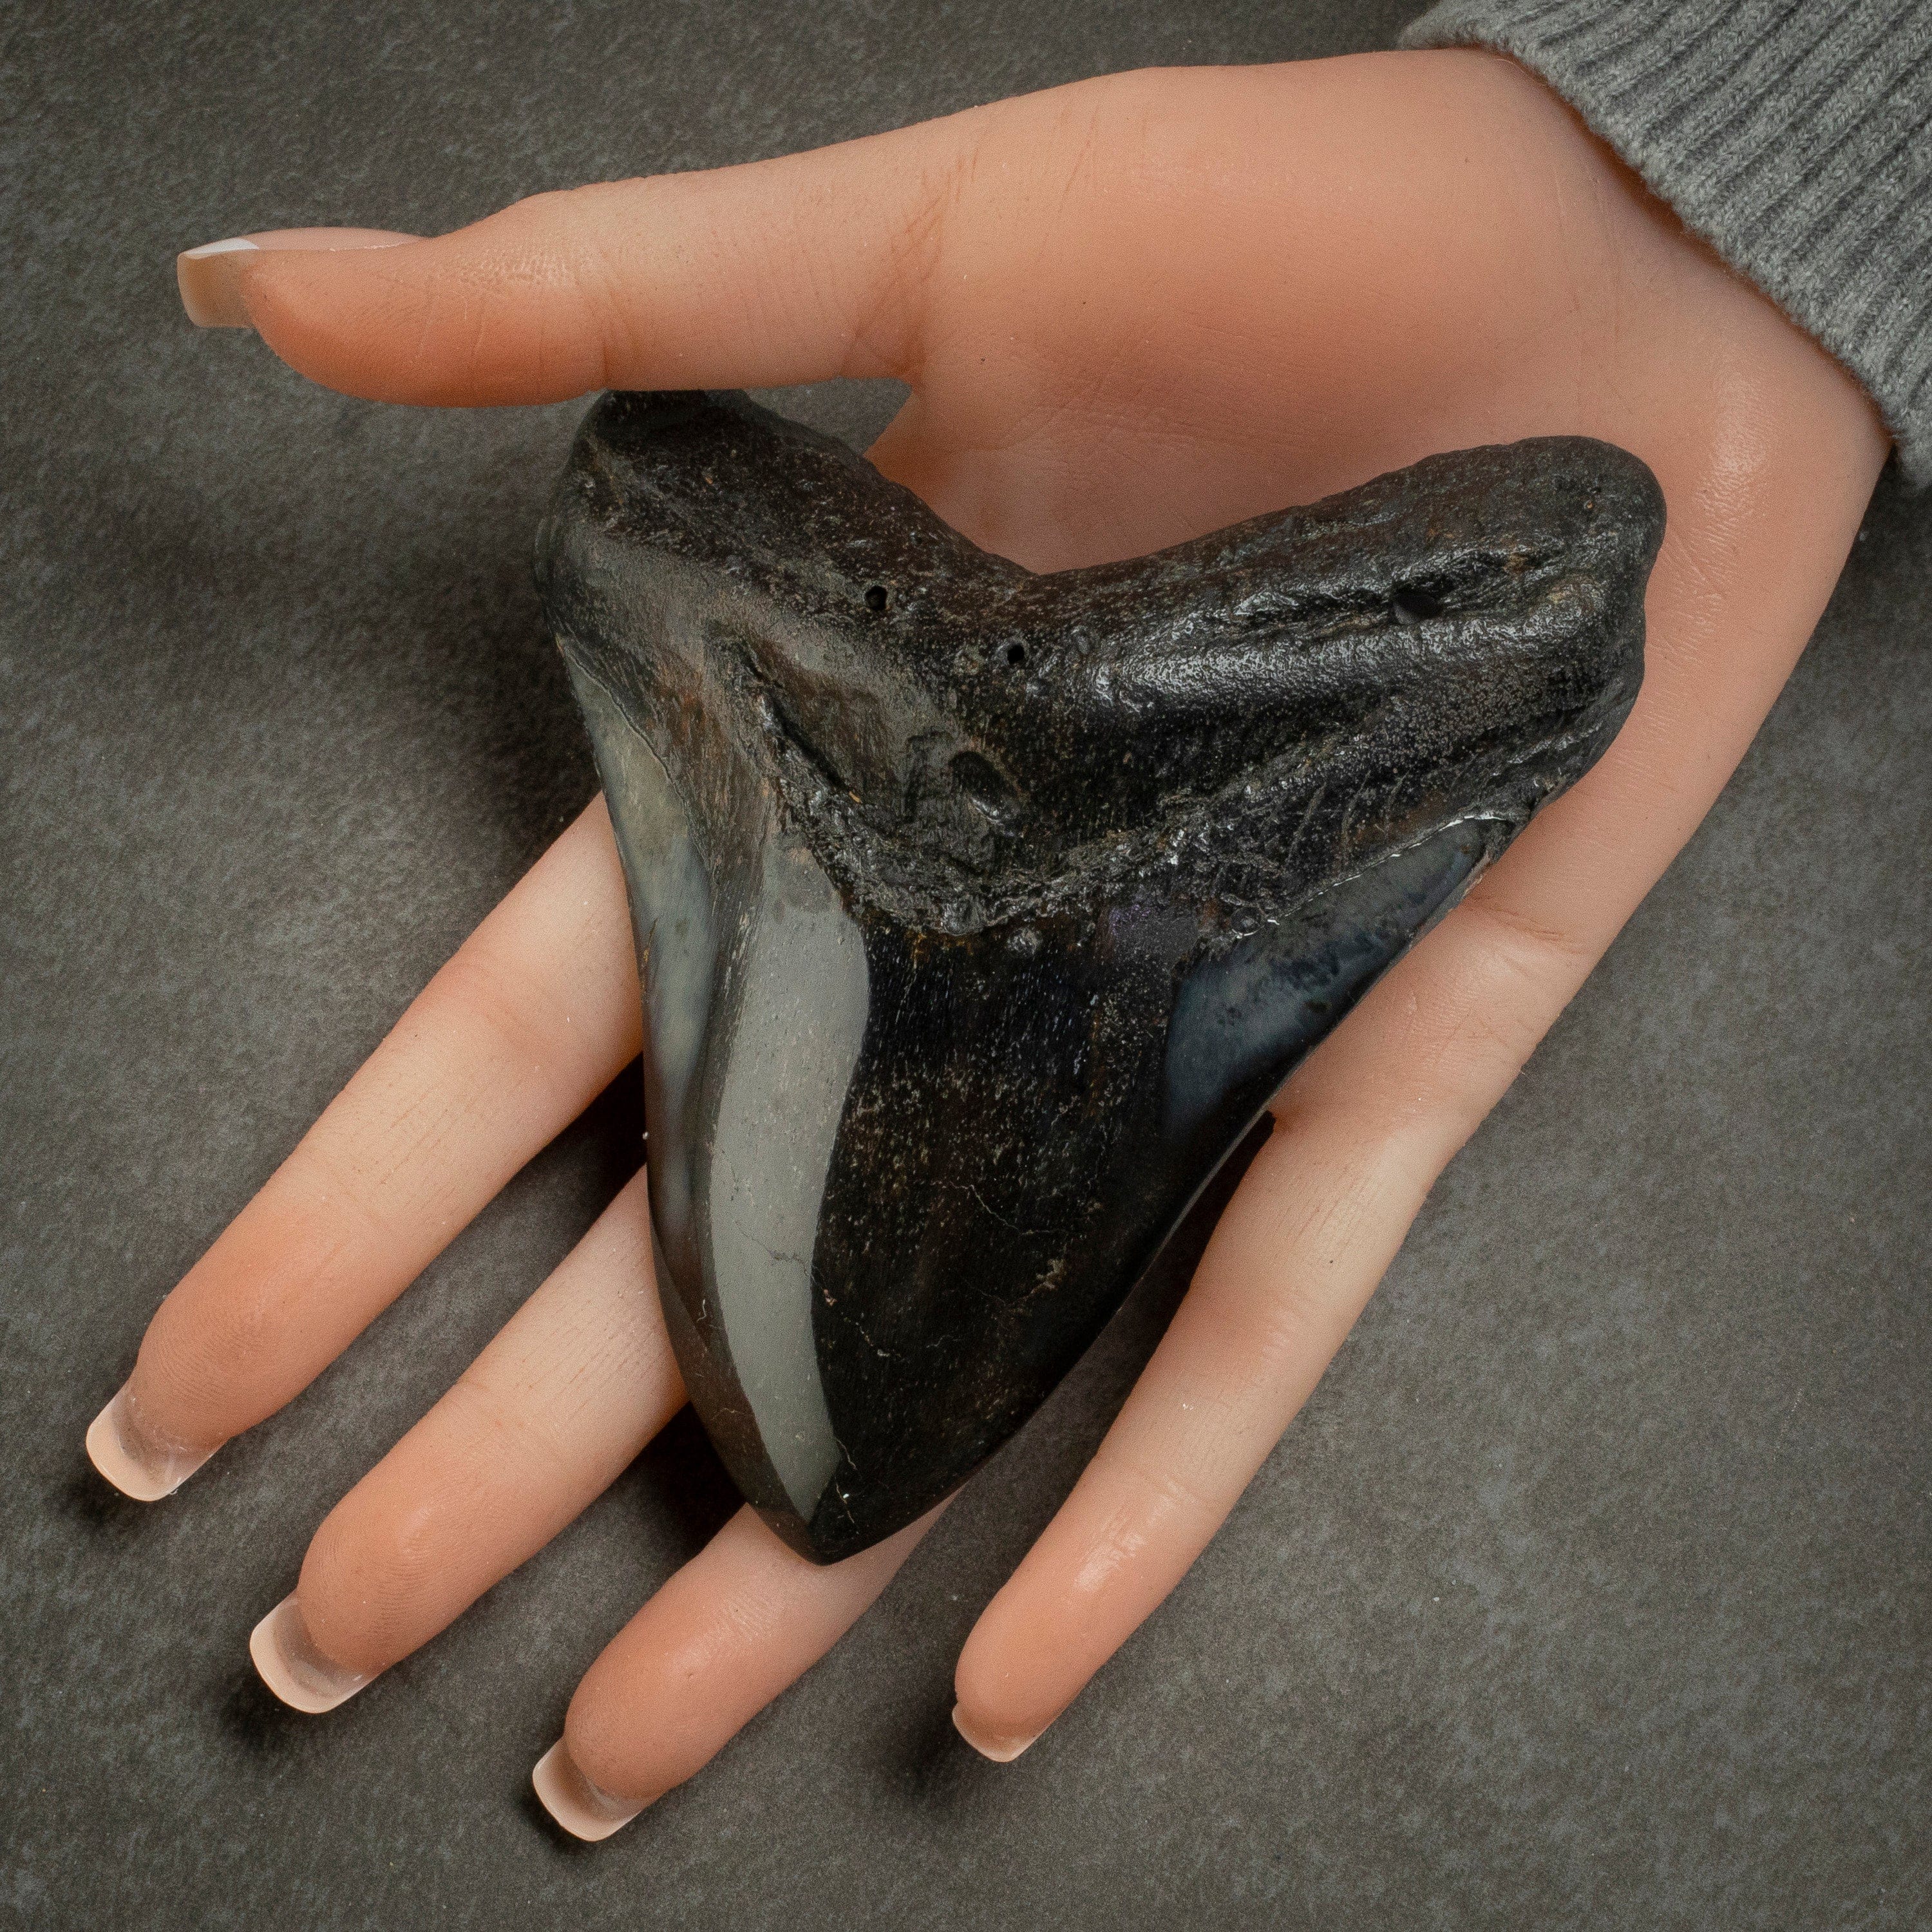 Kalifano Megalodon Teeth Megalodon Tooth from South Carolina - 4.3" ST2000.121